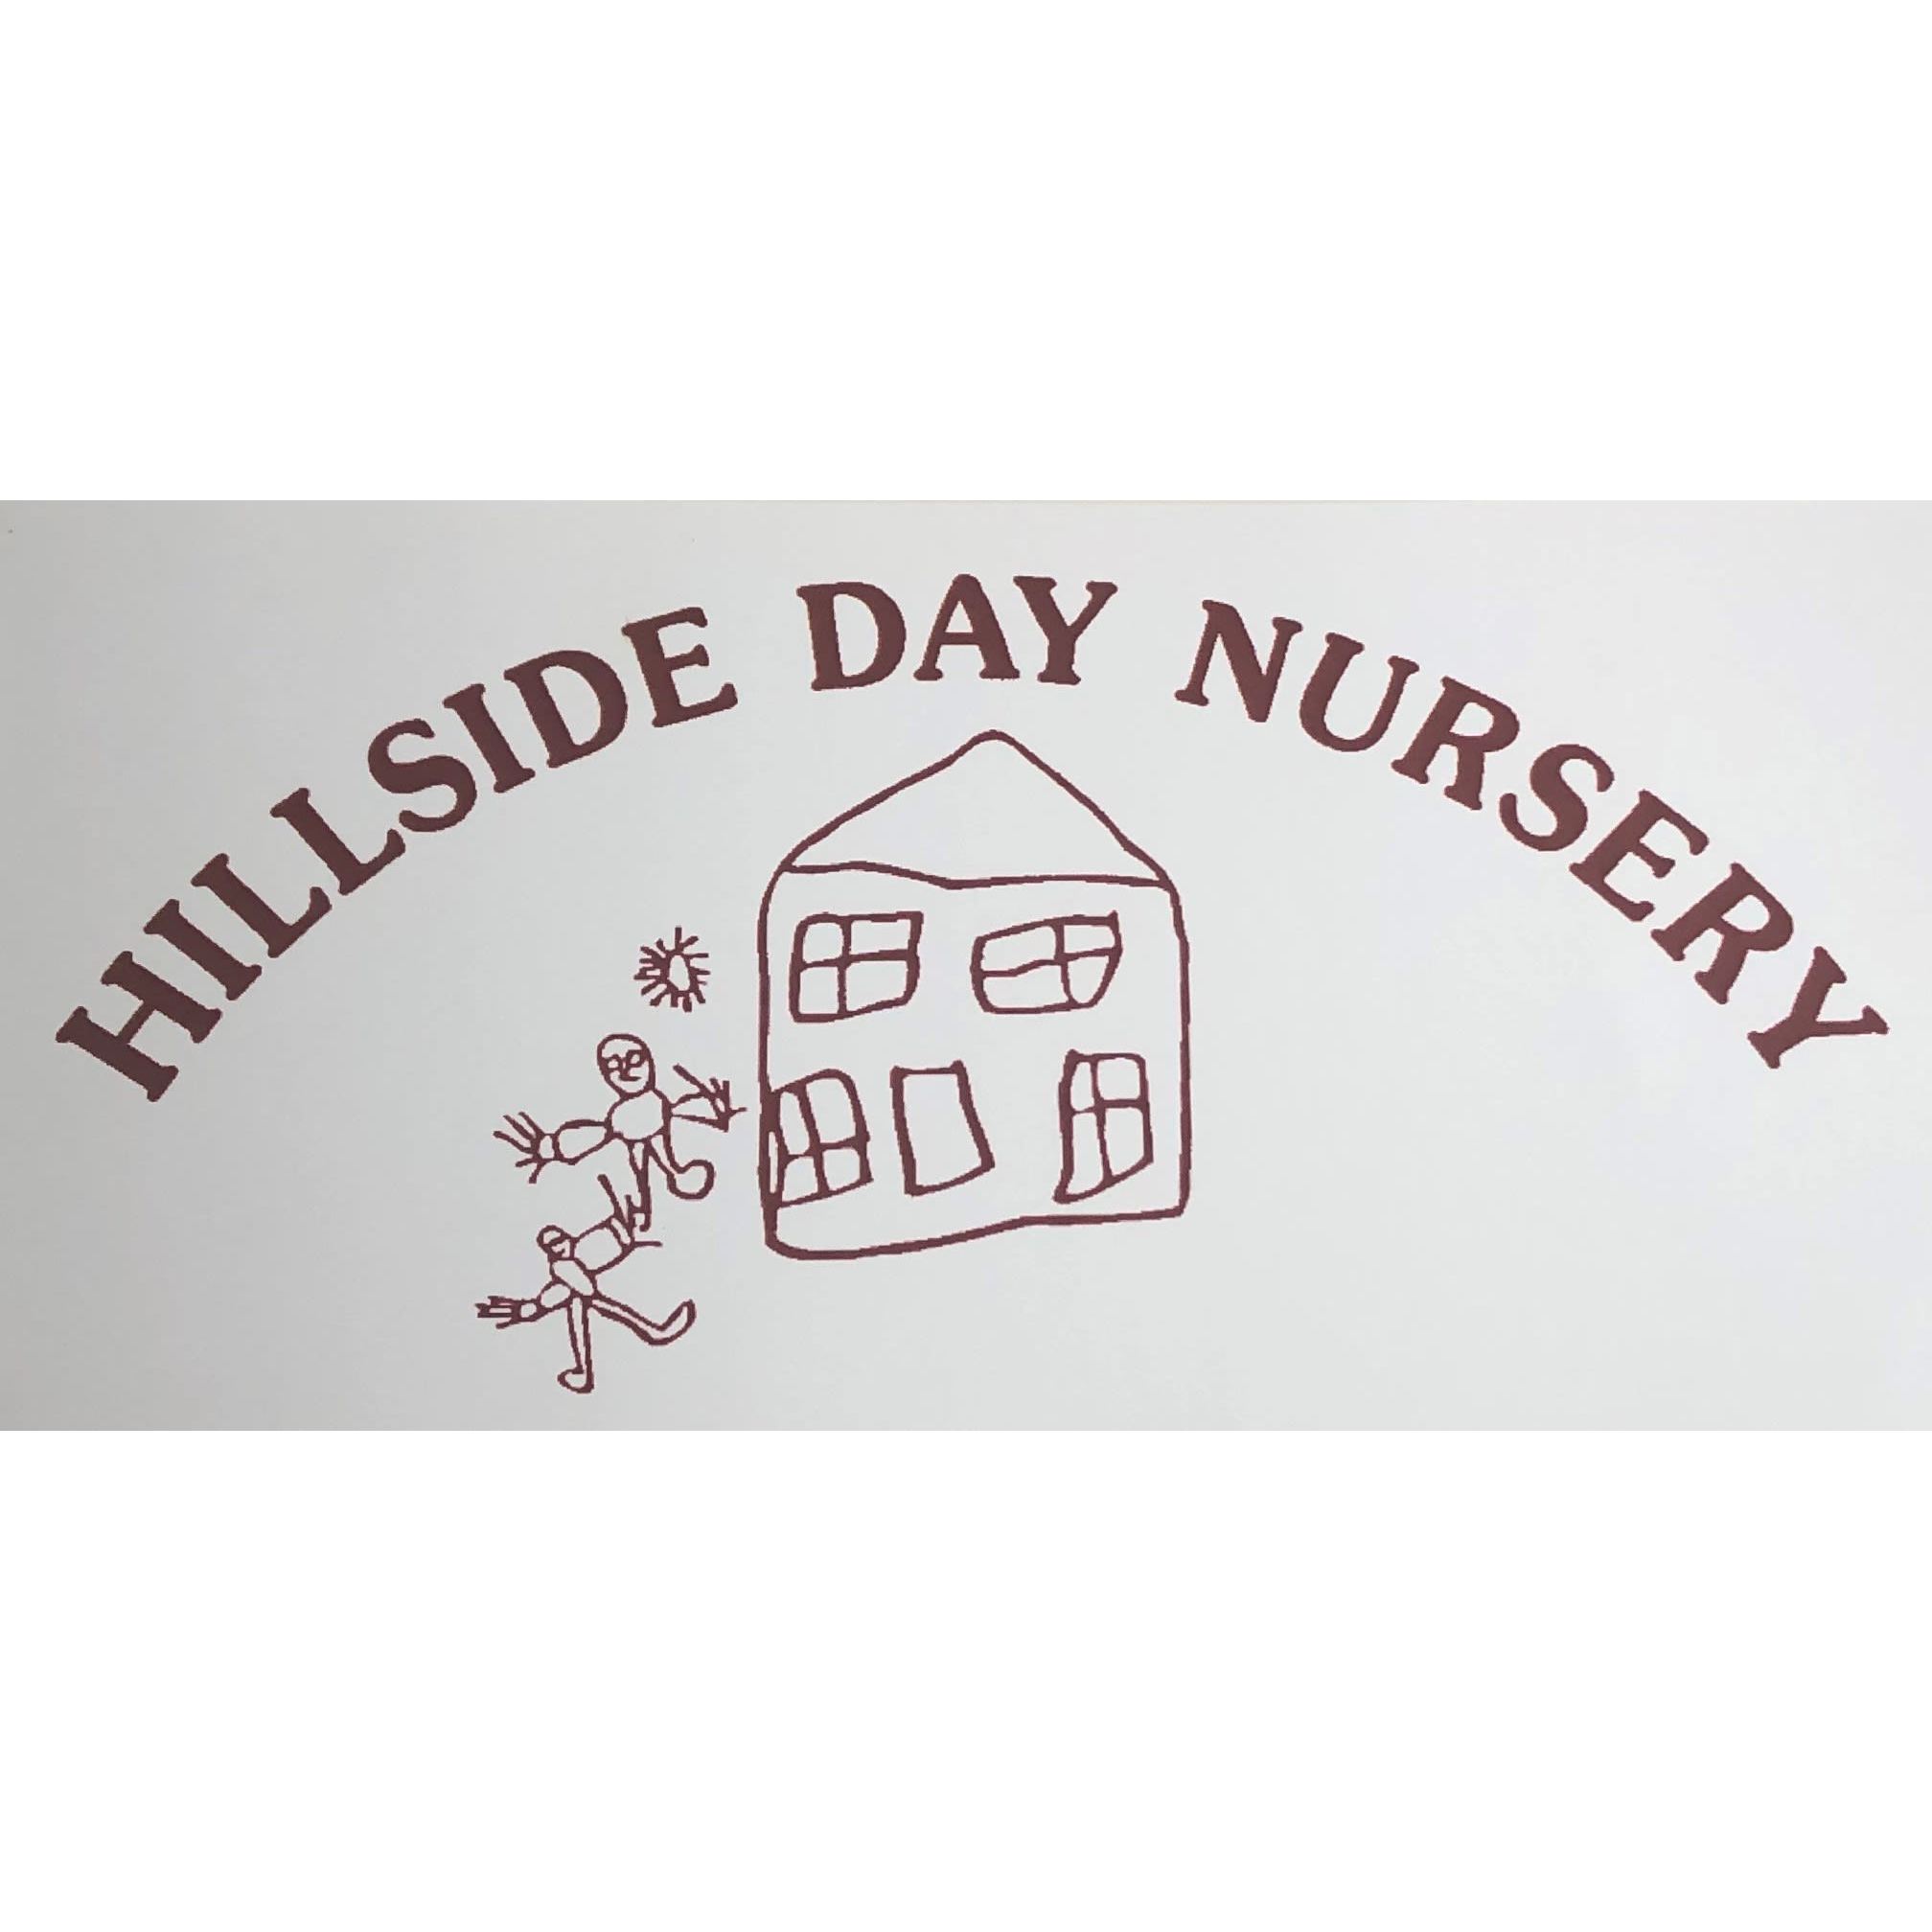 LOGO Hillside Day Nursery Ltd - Potterswood Bristol 01179 604330